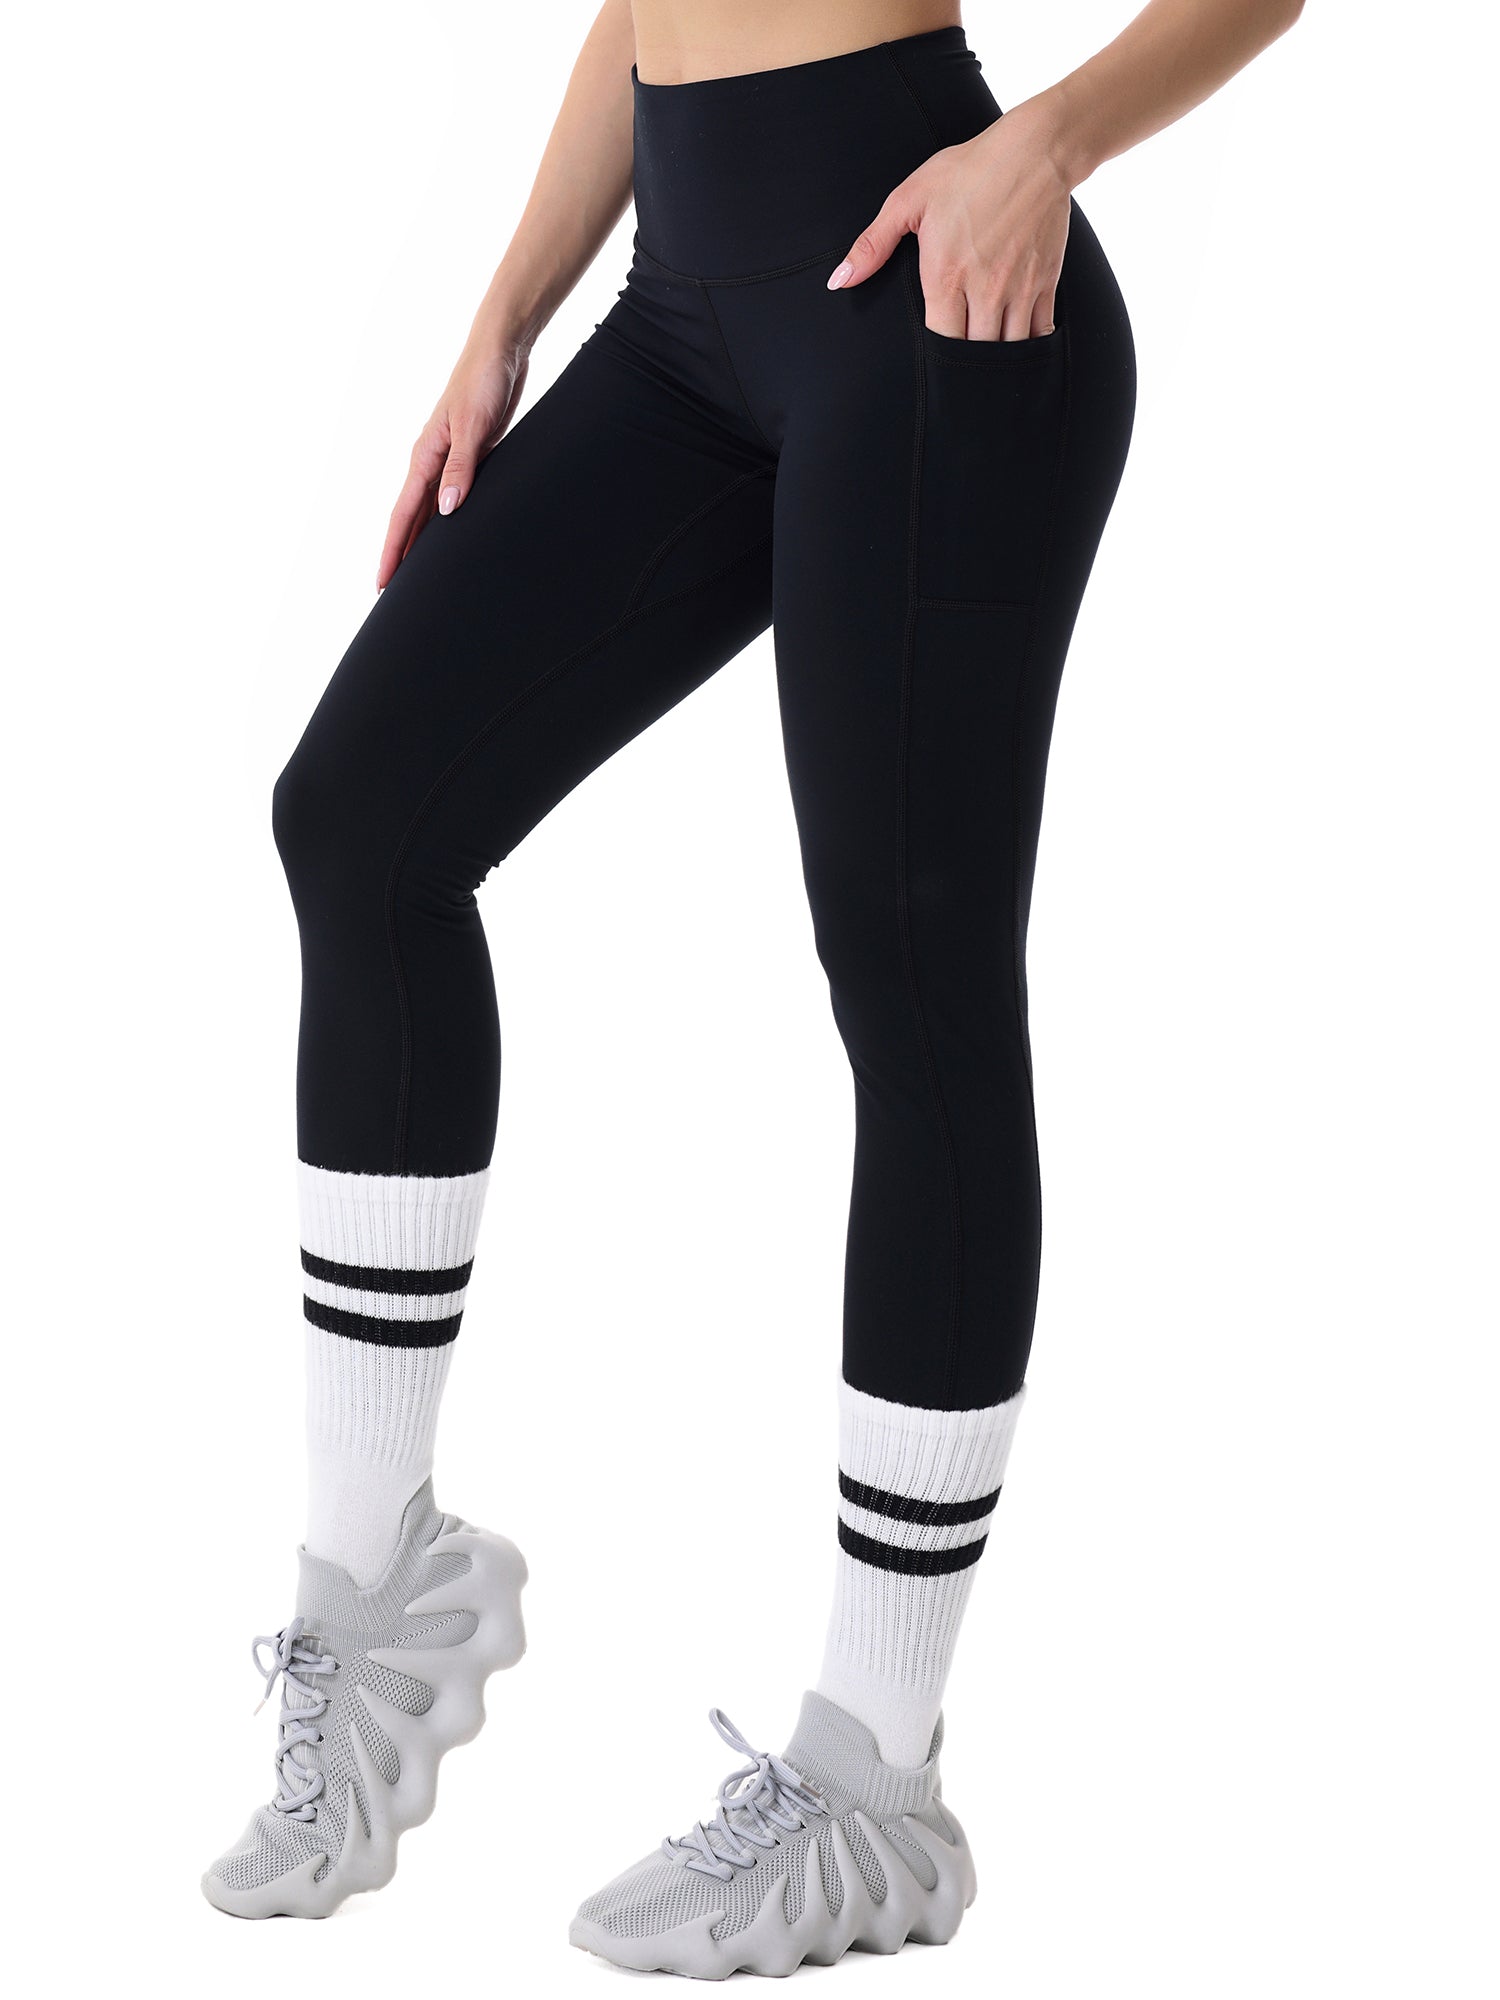 Black Leggings With One White Stripe - A Girl Exercising